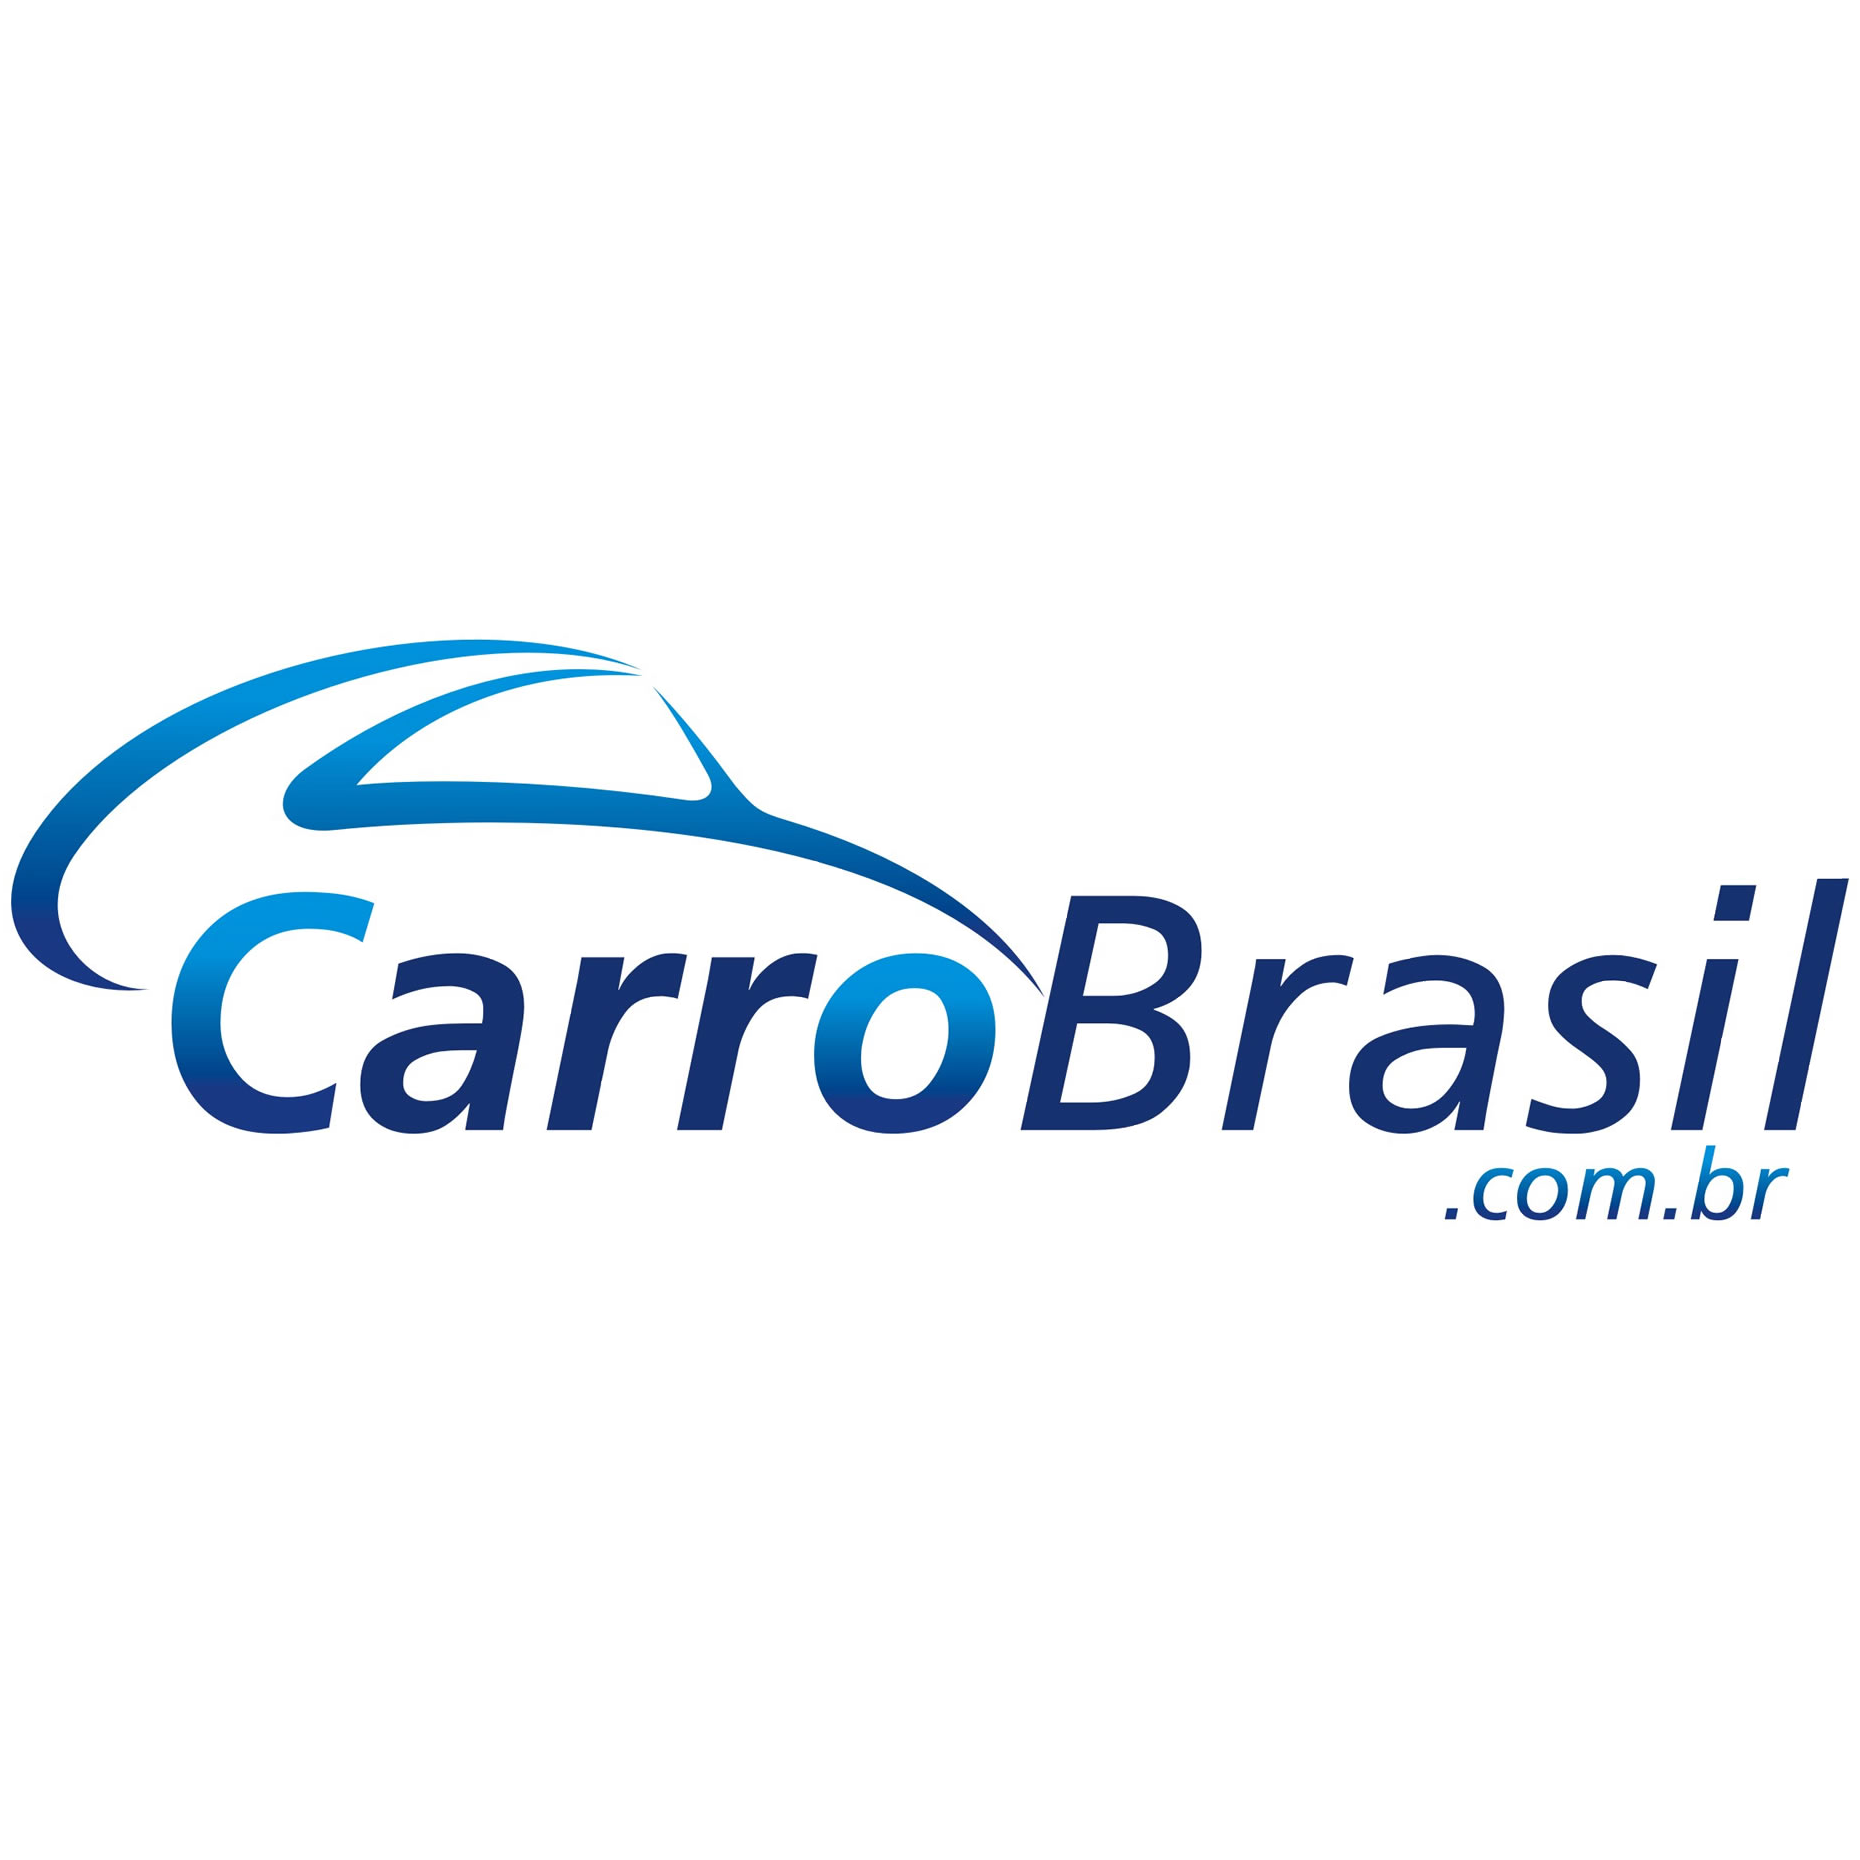 (c) Carrobrasil.com.br